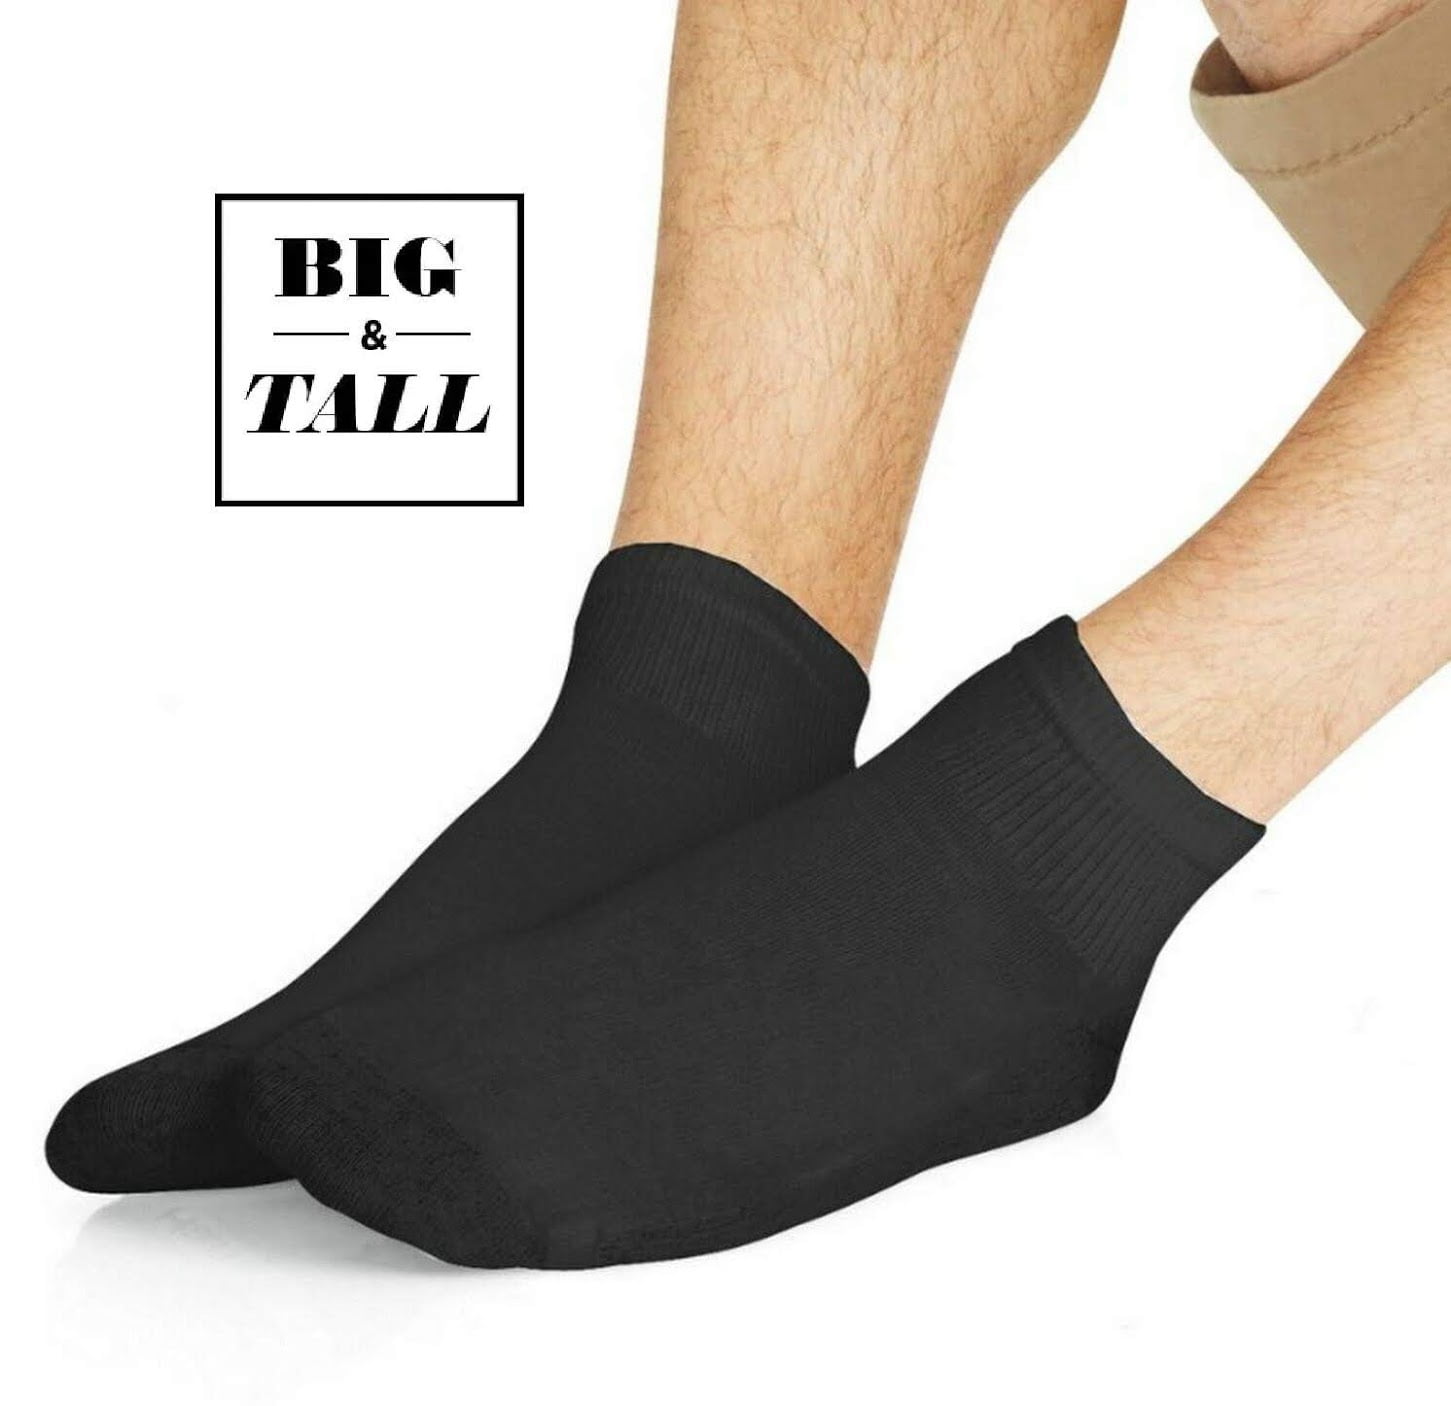 12-14 13-15 Sock Hanes Men's Big and Tall Active Cool 12-Pack Crew Socks Black,BIG Shoe